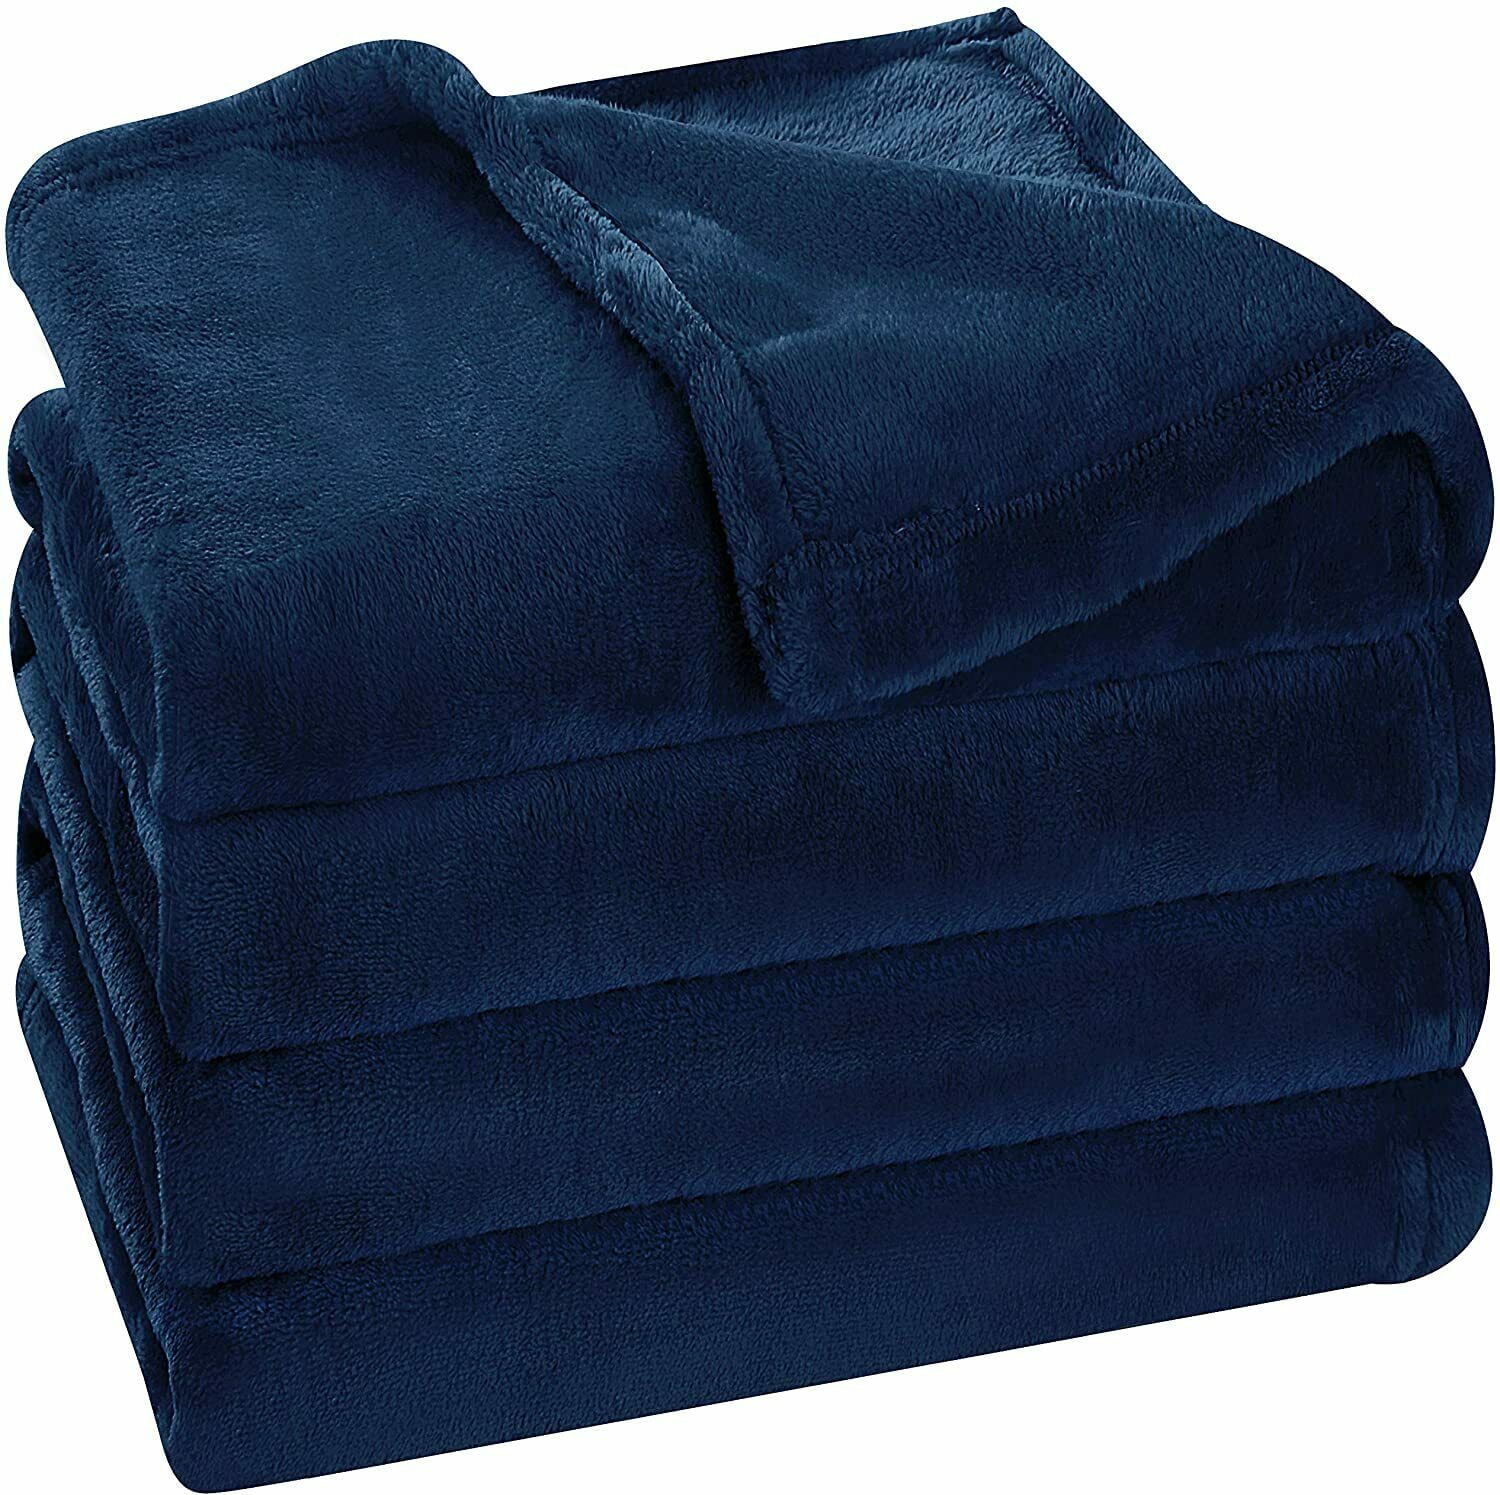 Super Soft Flannel Fleece Blanket Lightweight Bed Warm Blanket